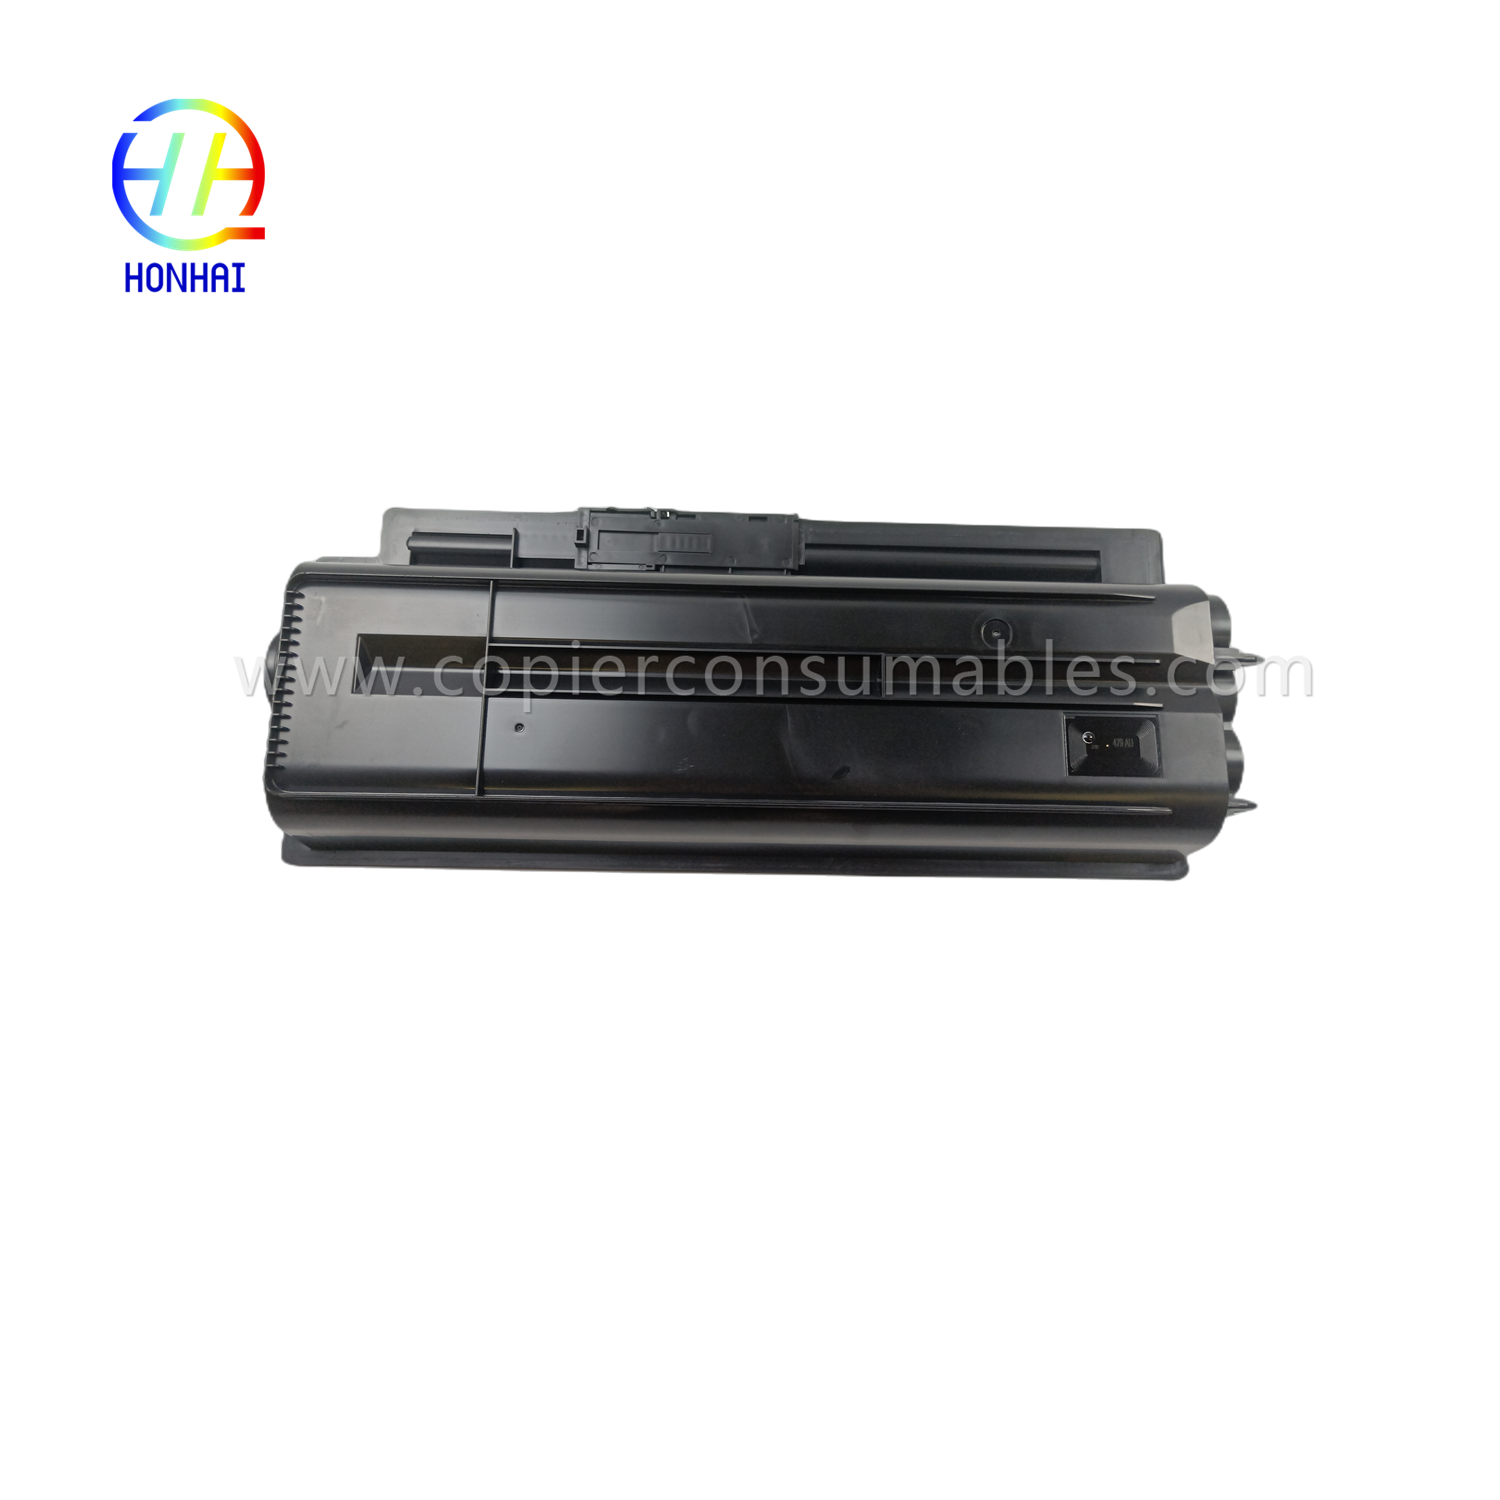 Toner Cartridge Black for Kyocera Tk-479 6025 6030 6525 6530 CS305 CS255